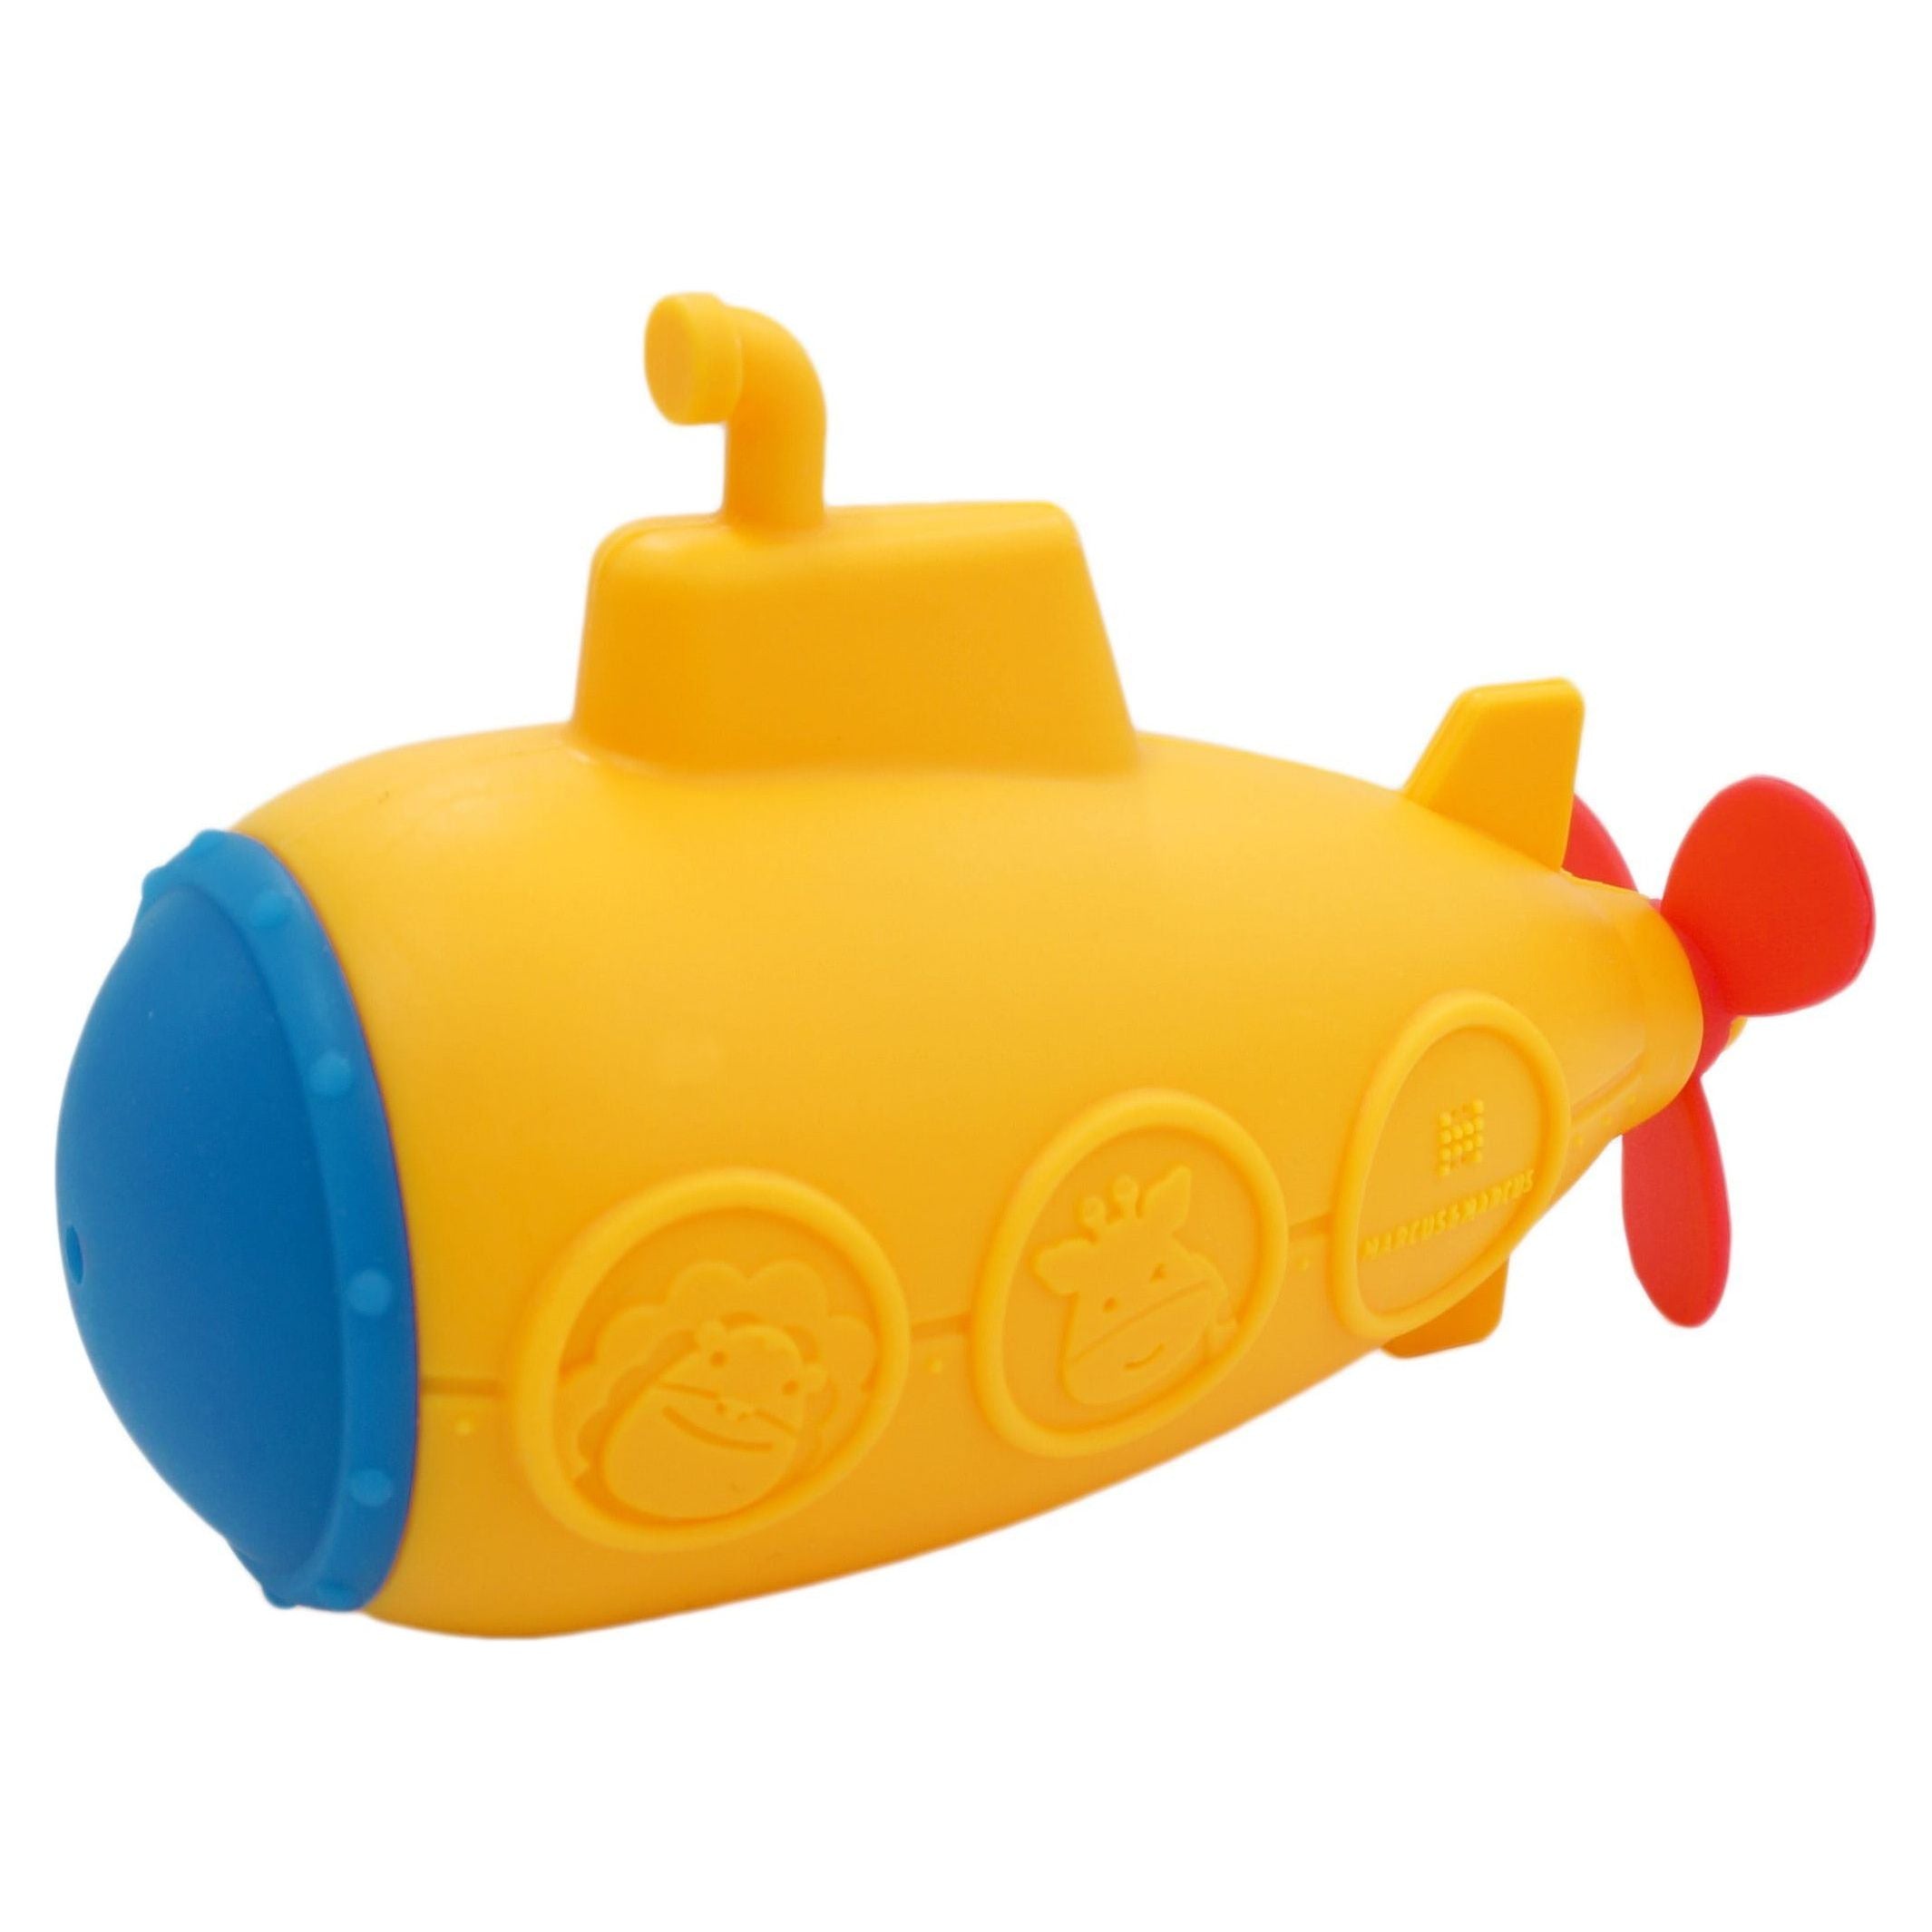 Marcus n Marcus Silicone Bath Toys - Submarine | Little Baby.